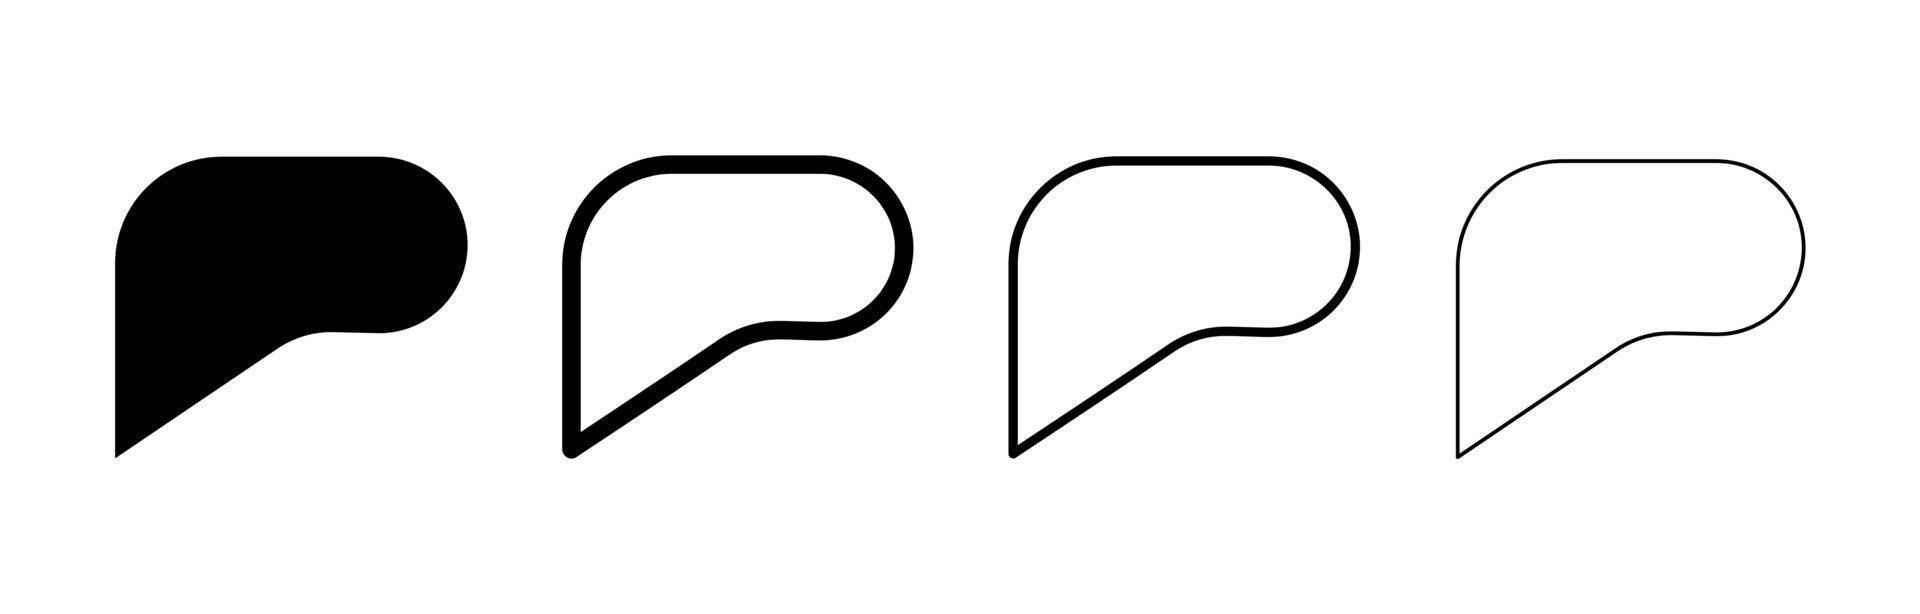 set chat-symbol im flachen stil isoliert. vektor